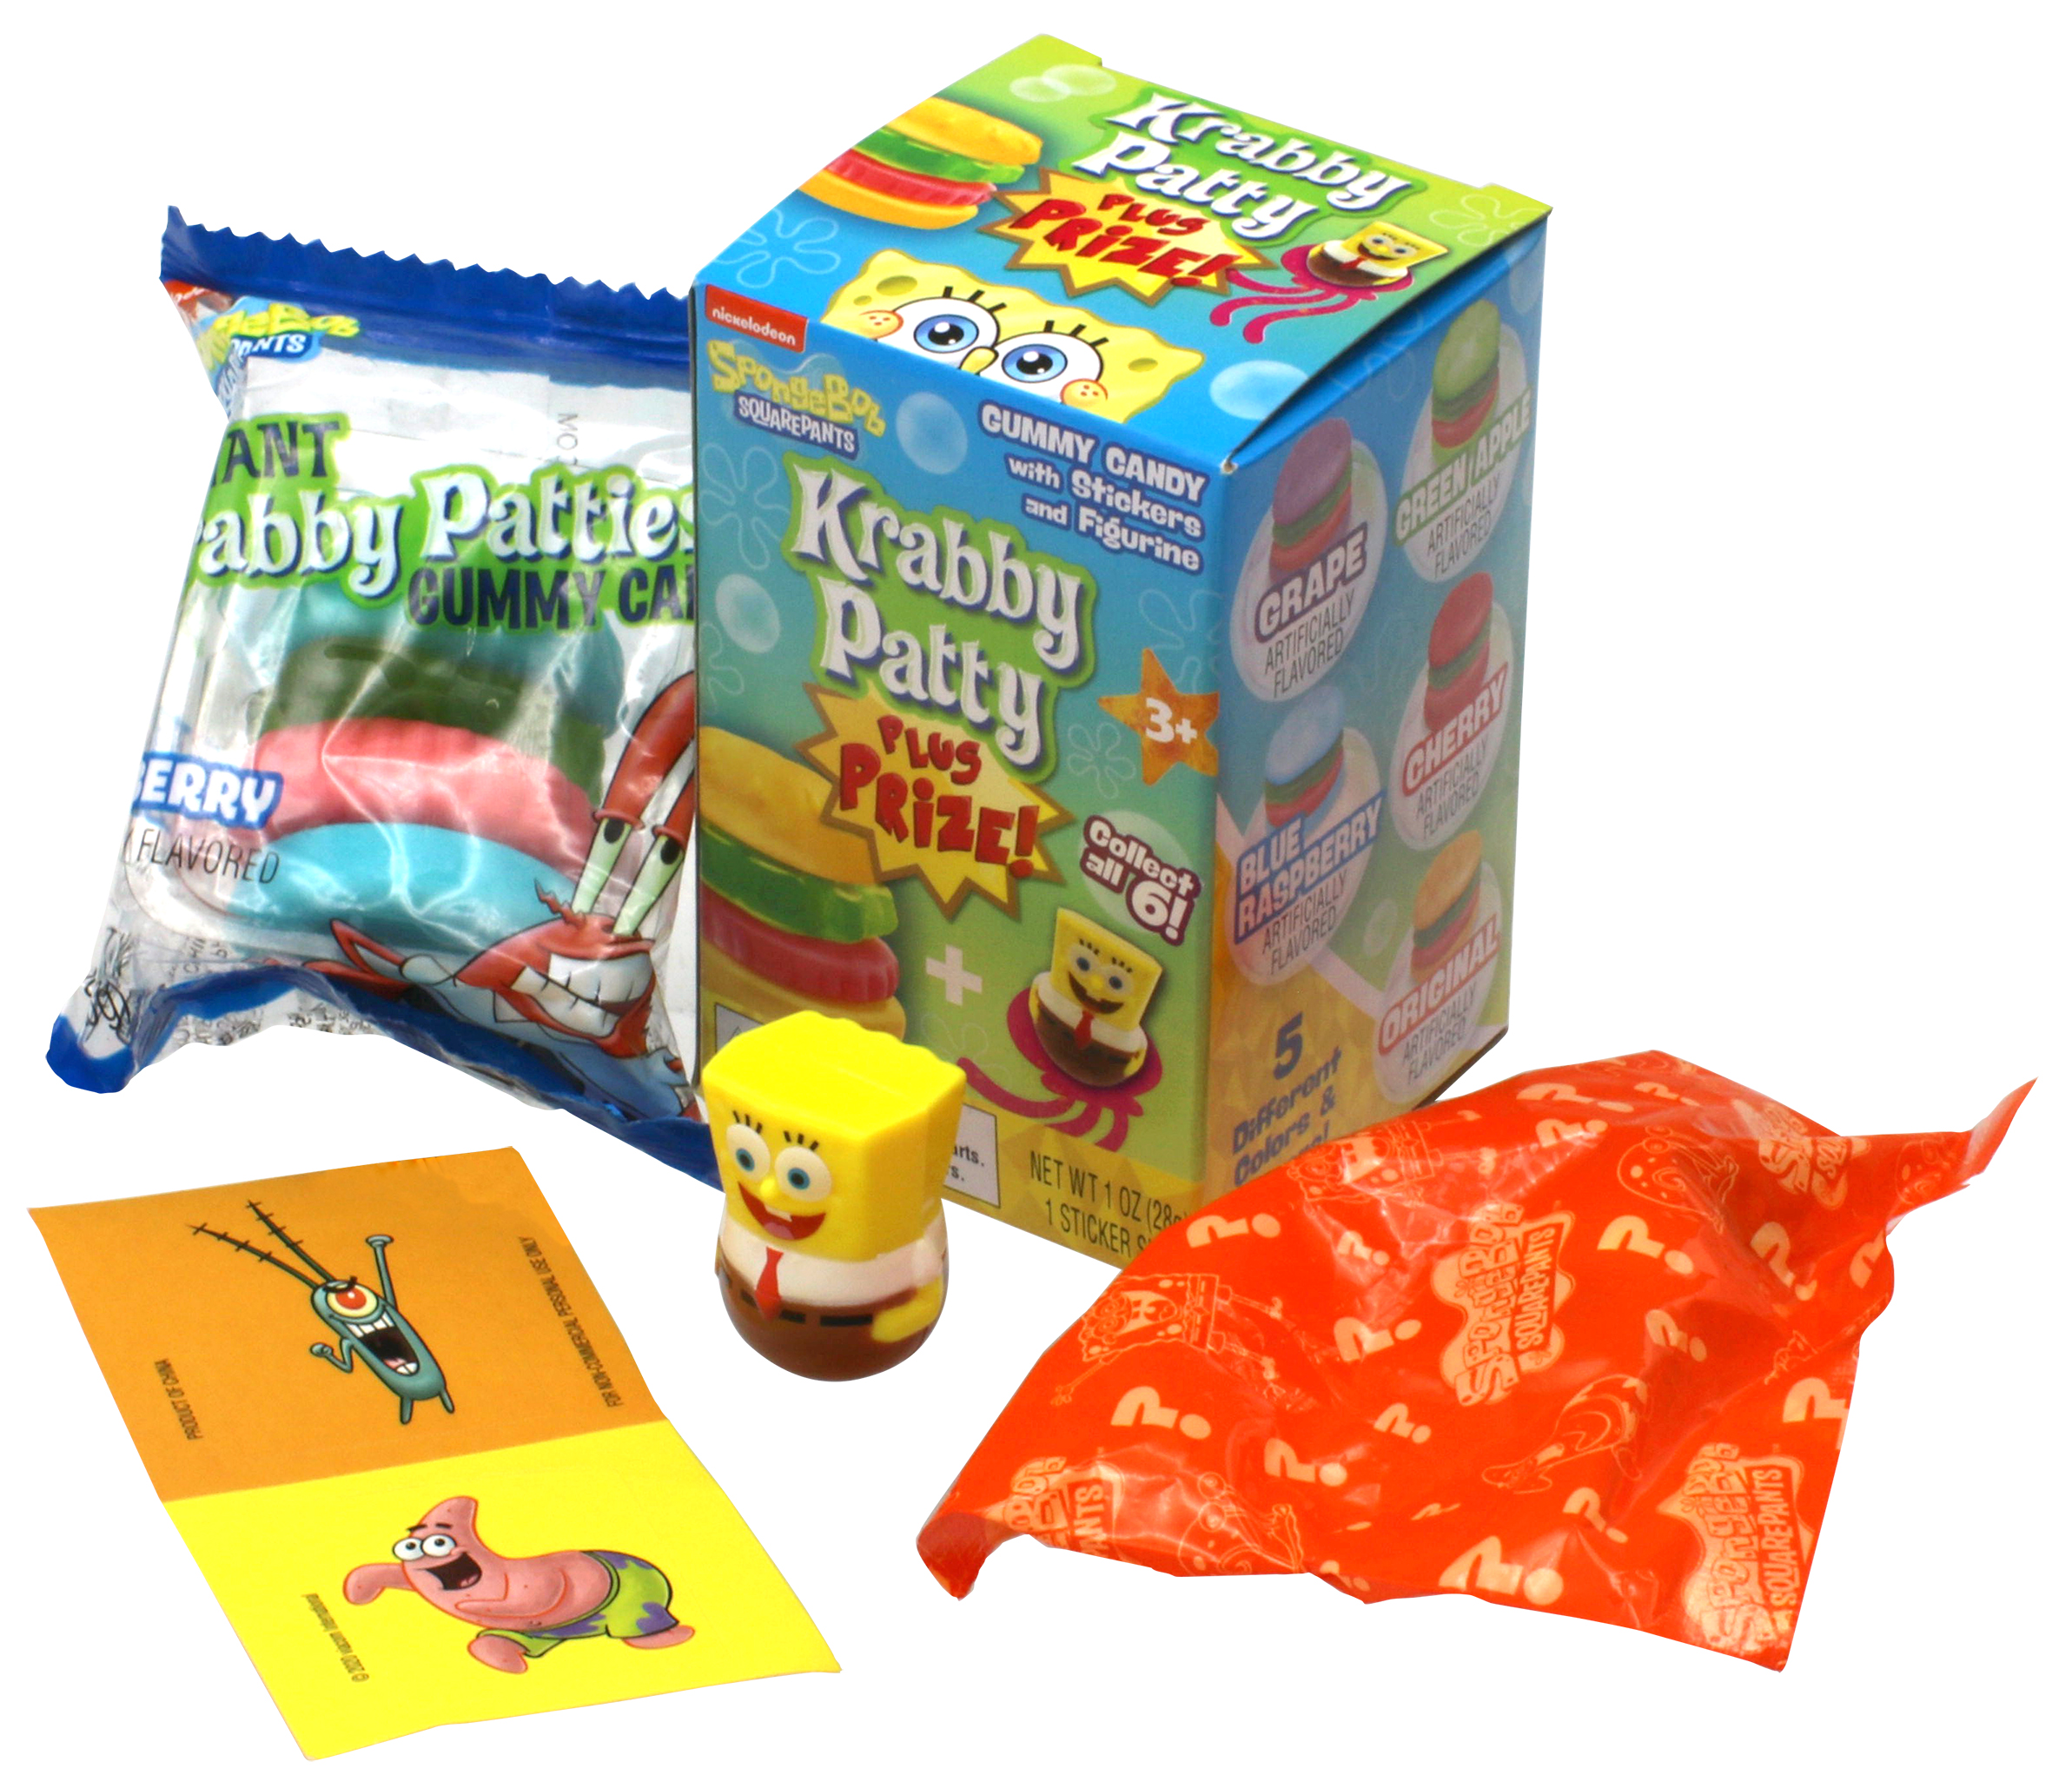 Frankford SpongeBob SquarePants Gummy Krabby Patty Plus Prize, Assorted Fruit Flavor, 1 oz - image 2 of 18